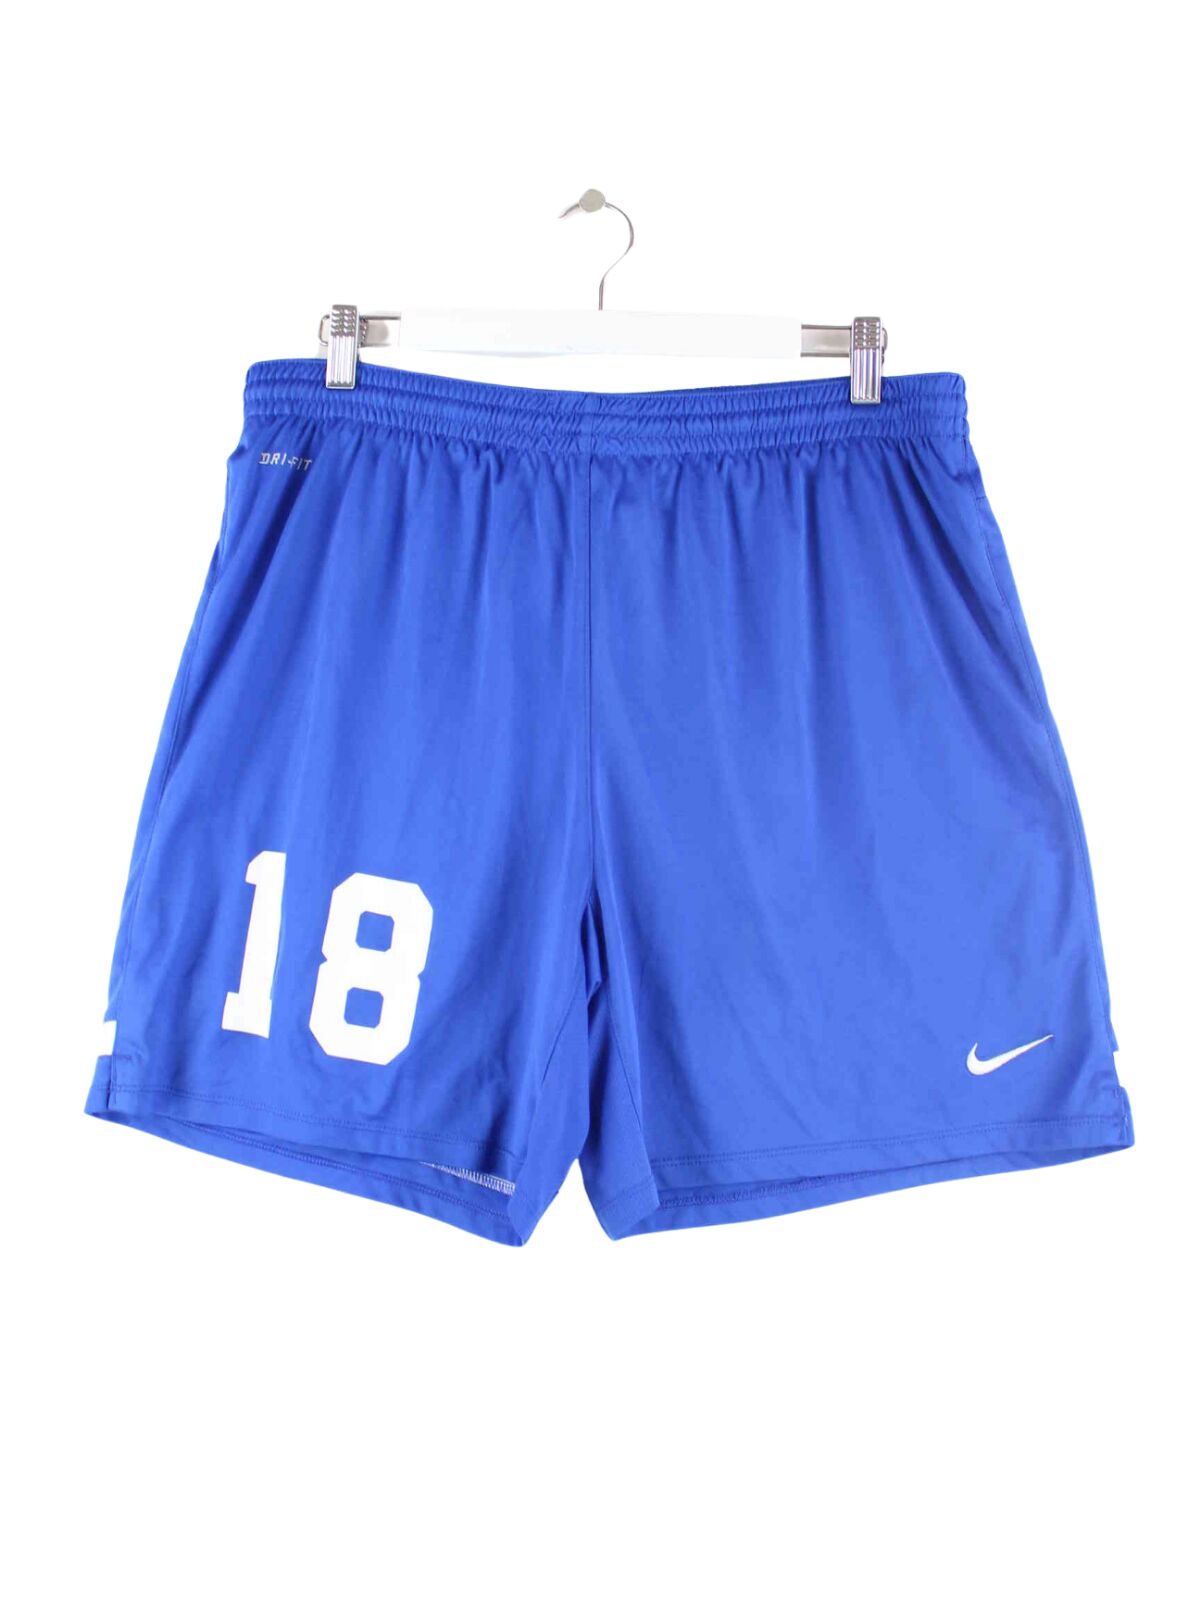 Nike Dri Fit #18 Shorts Blau L (front image)